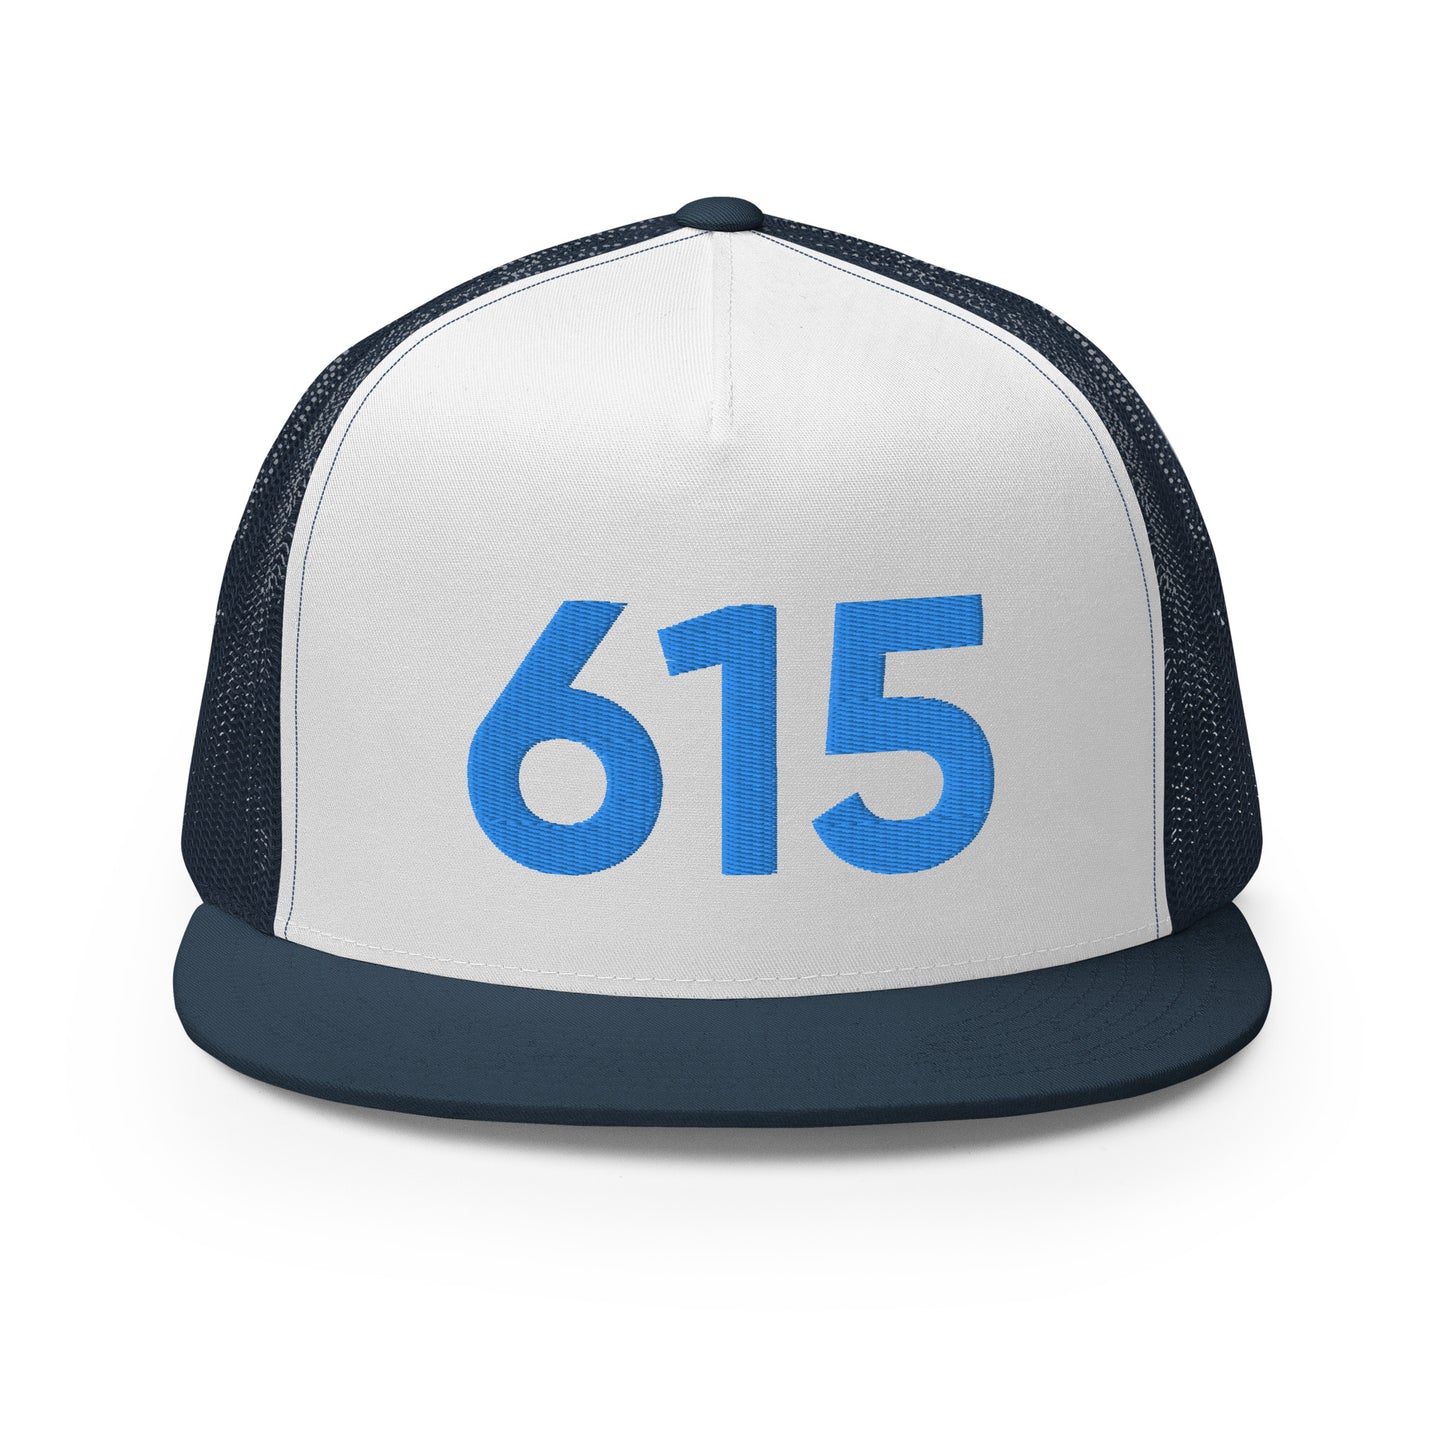 615 Tennessee Nation Trucker Hat